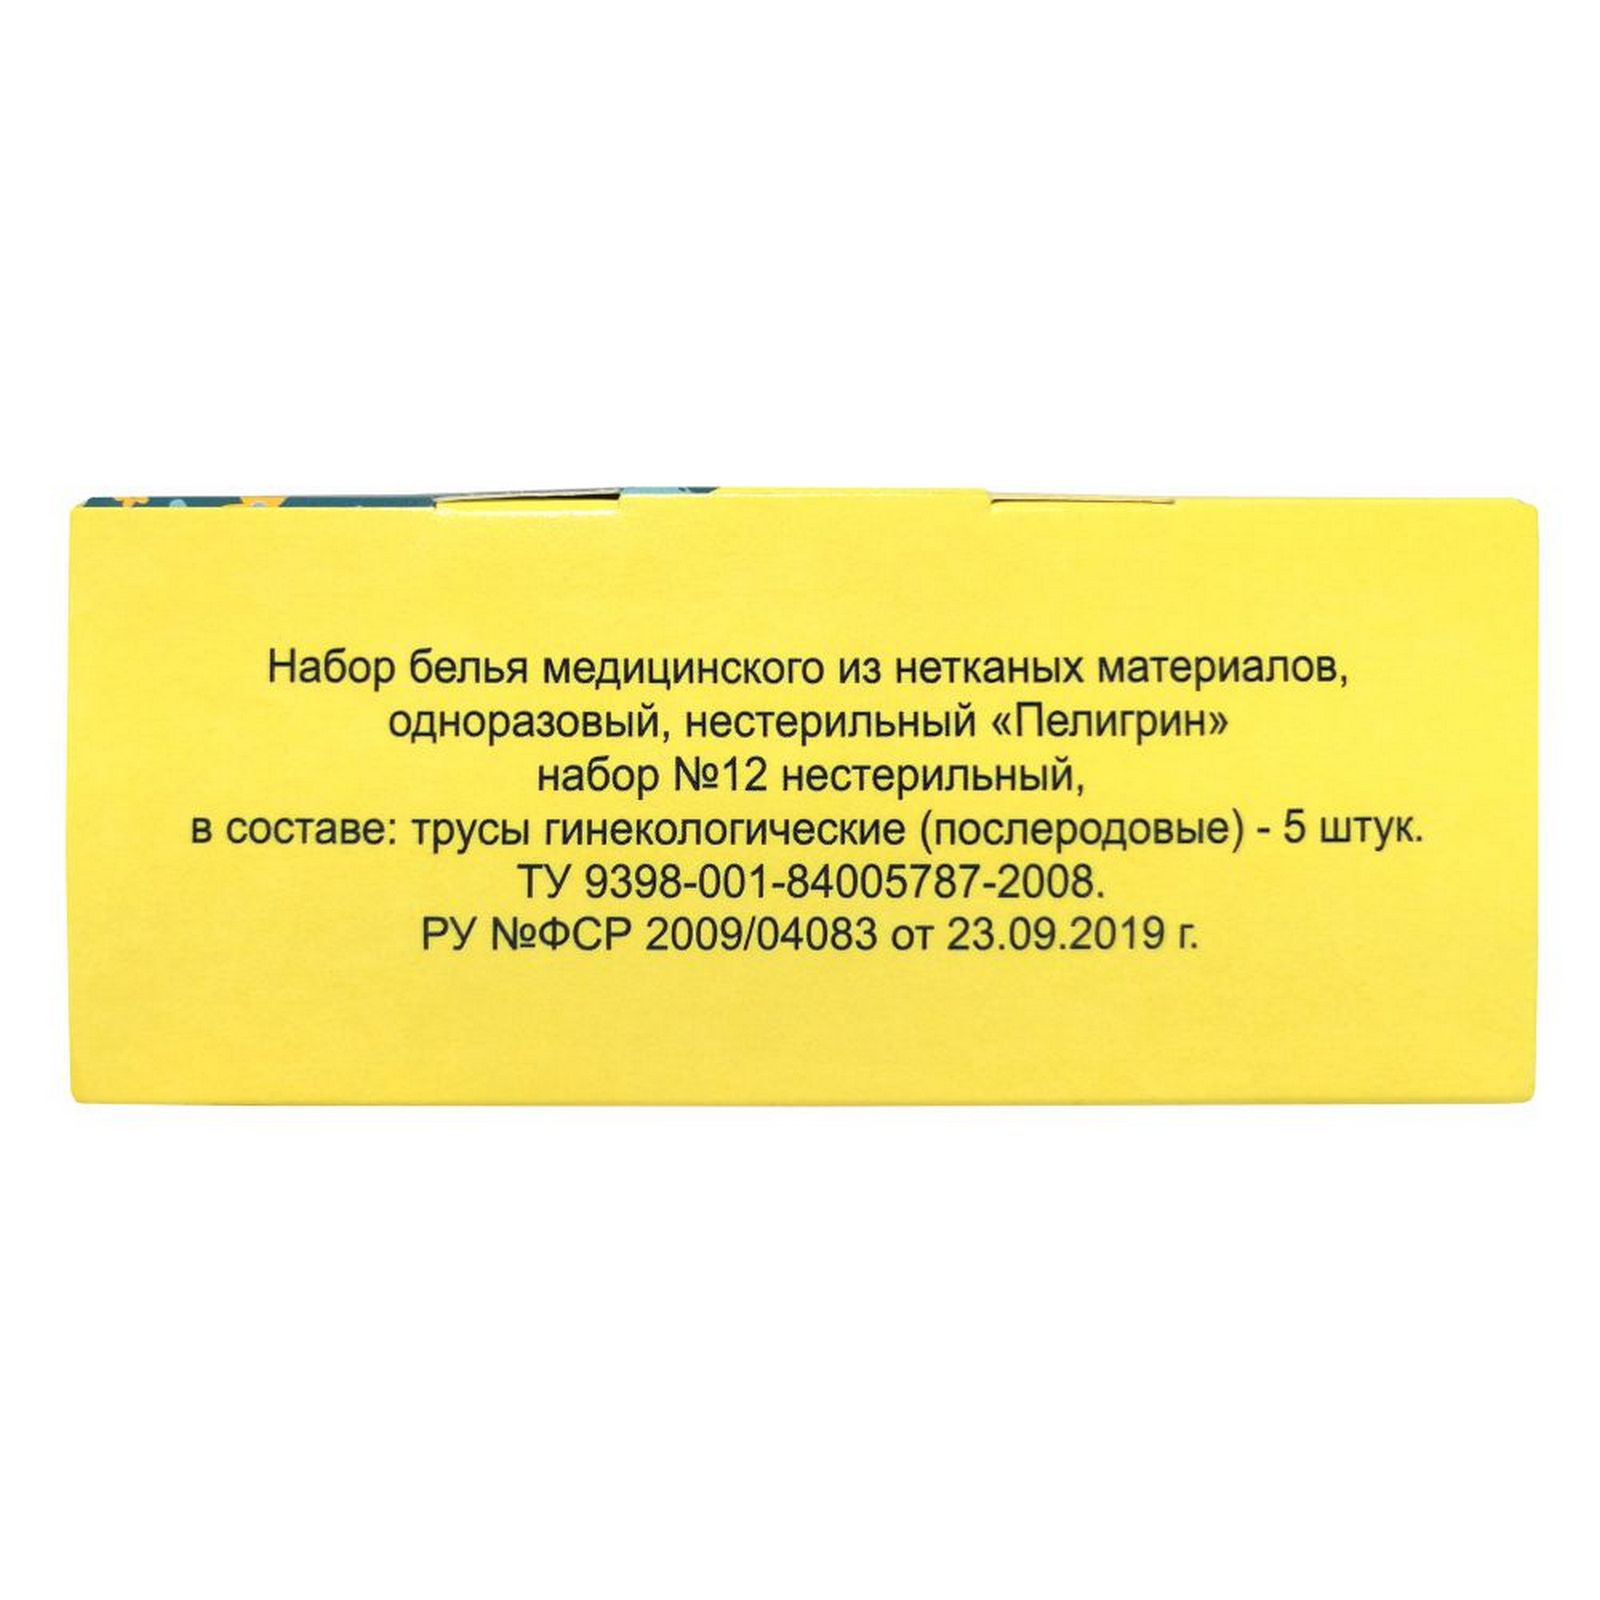 Трусики гинекологические Пелигрин одноразовые XL (48-52 р.) 5 шт. - цена,  фото, характеристики